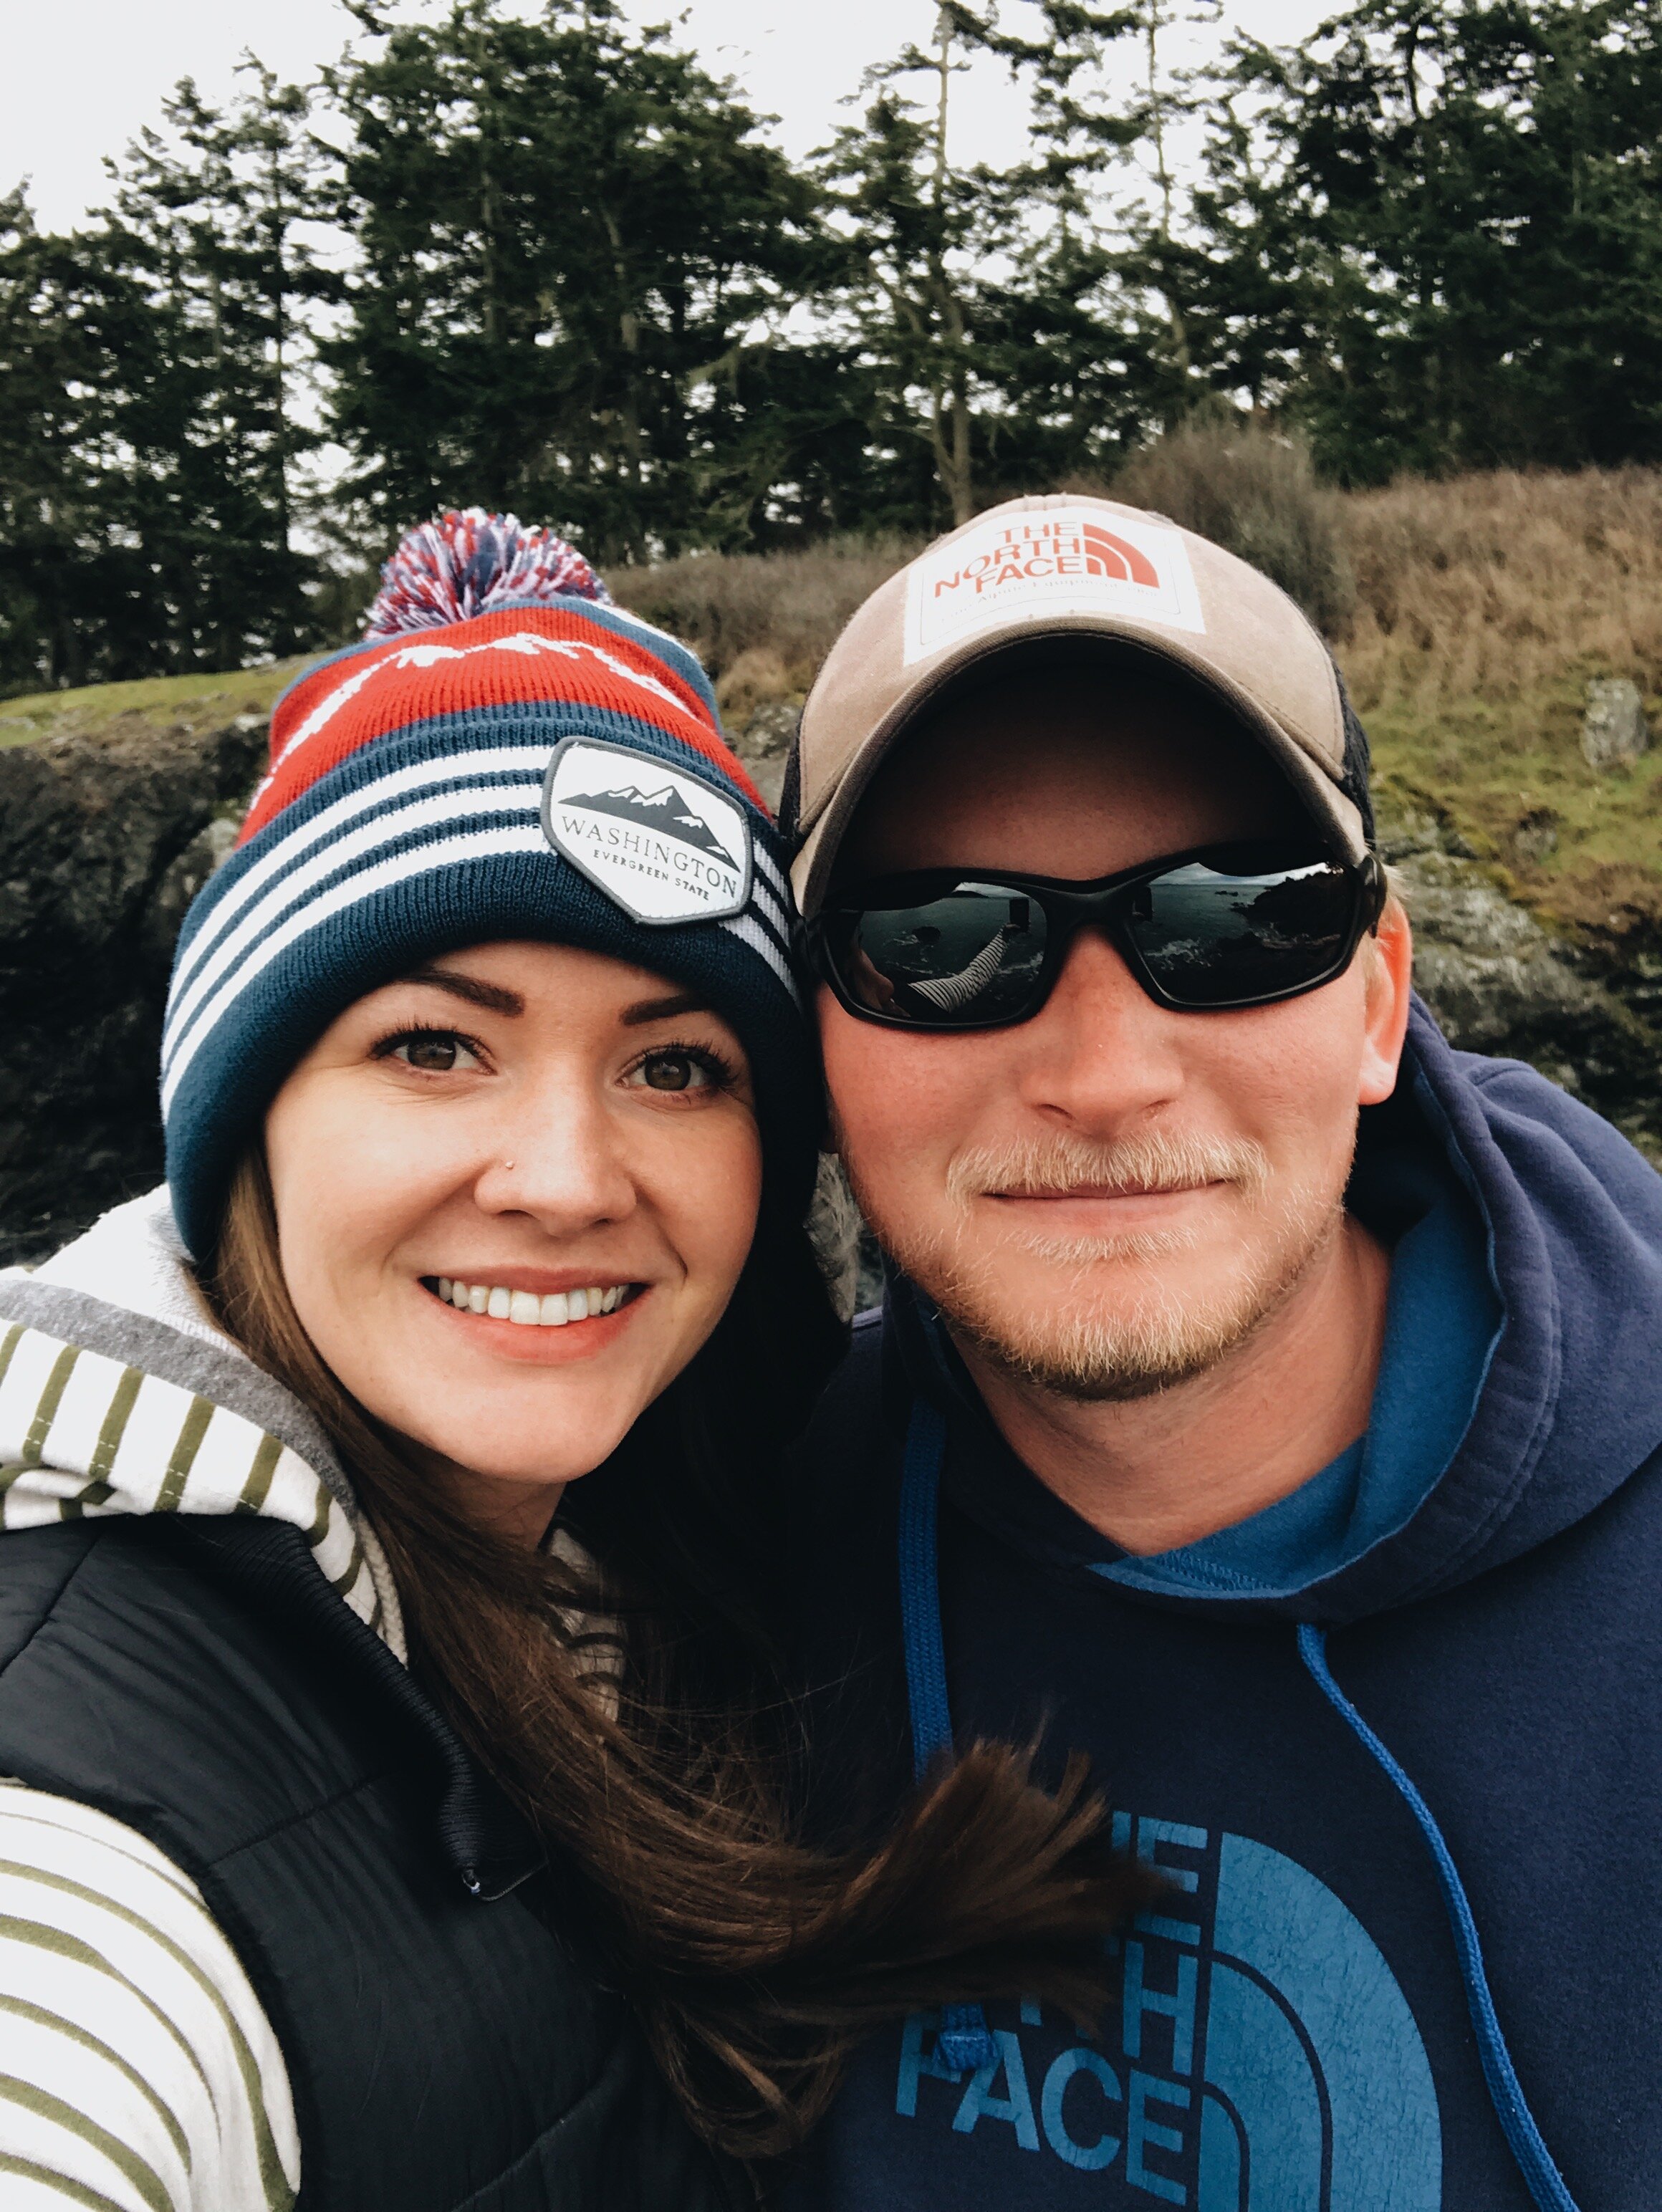  Mount Rainier wedding photographer, Jessi Cavey,&nbsp;adventures with husband in Oak Harbor, Washington. 